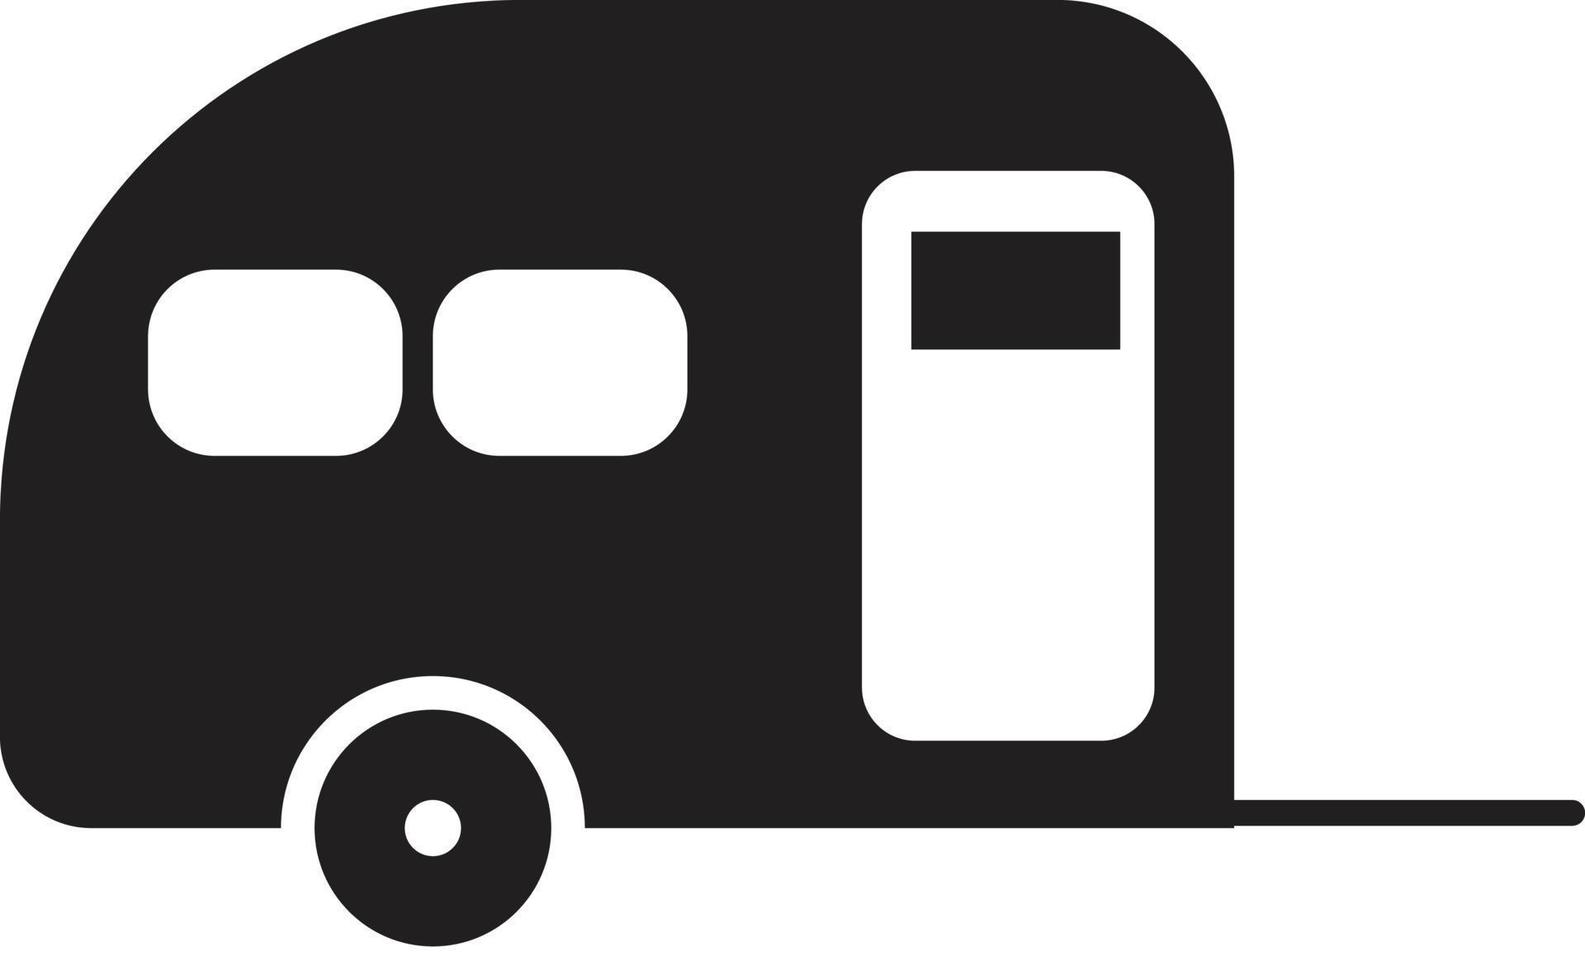 icône de caravane de camping. panneau de camping-car. symbole de la voiture de camping. signe de caravane de camping. vecteur